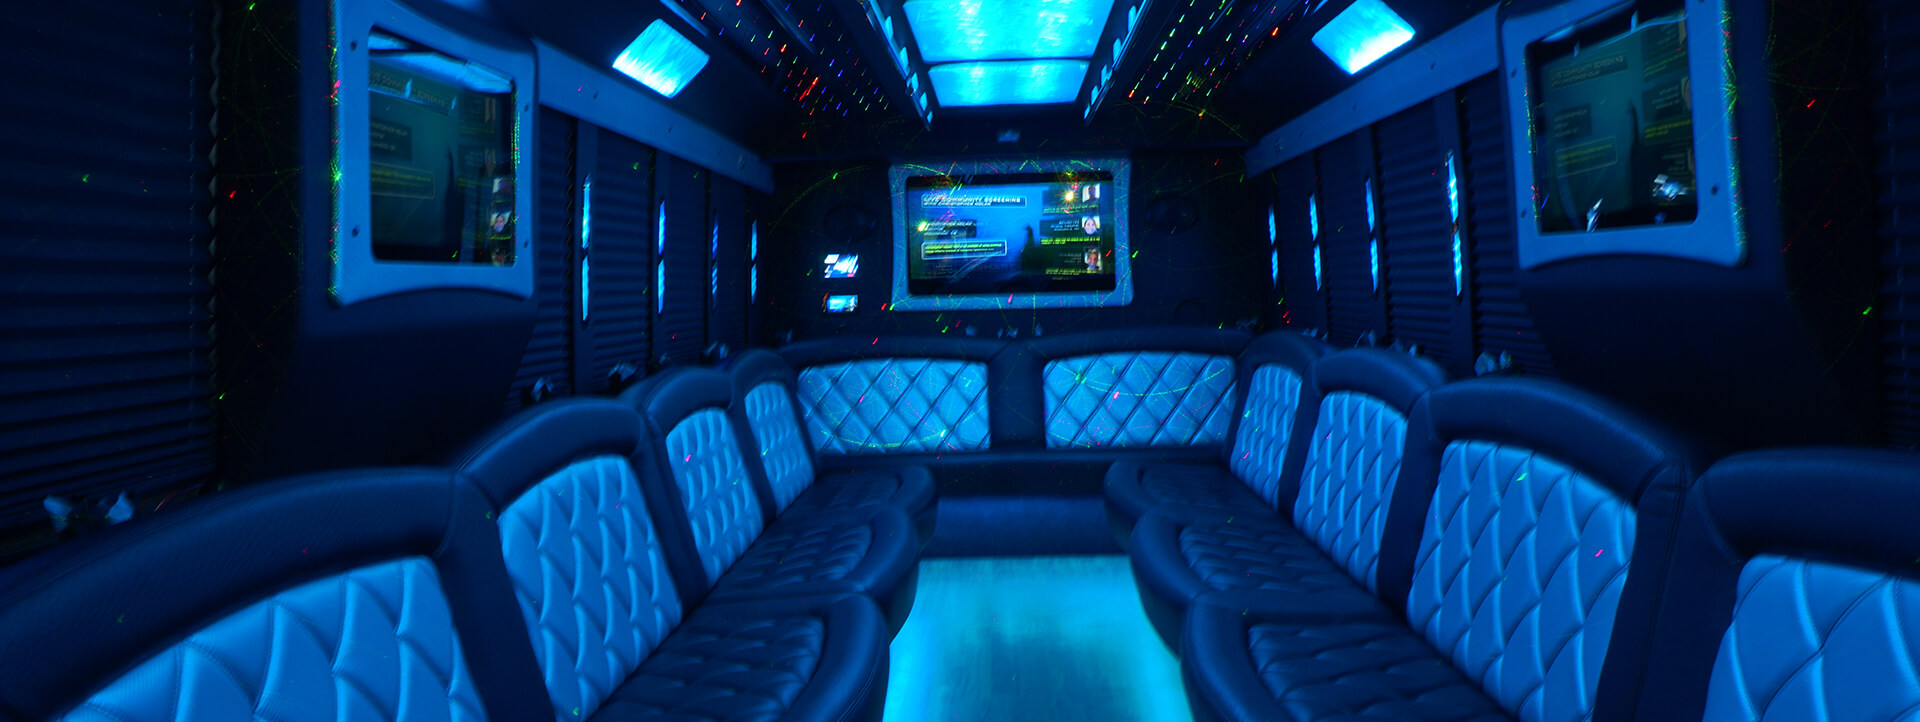 limousine bus interior with blue lighting